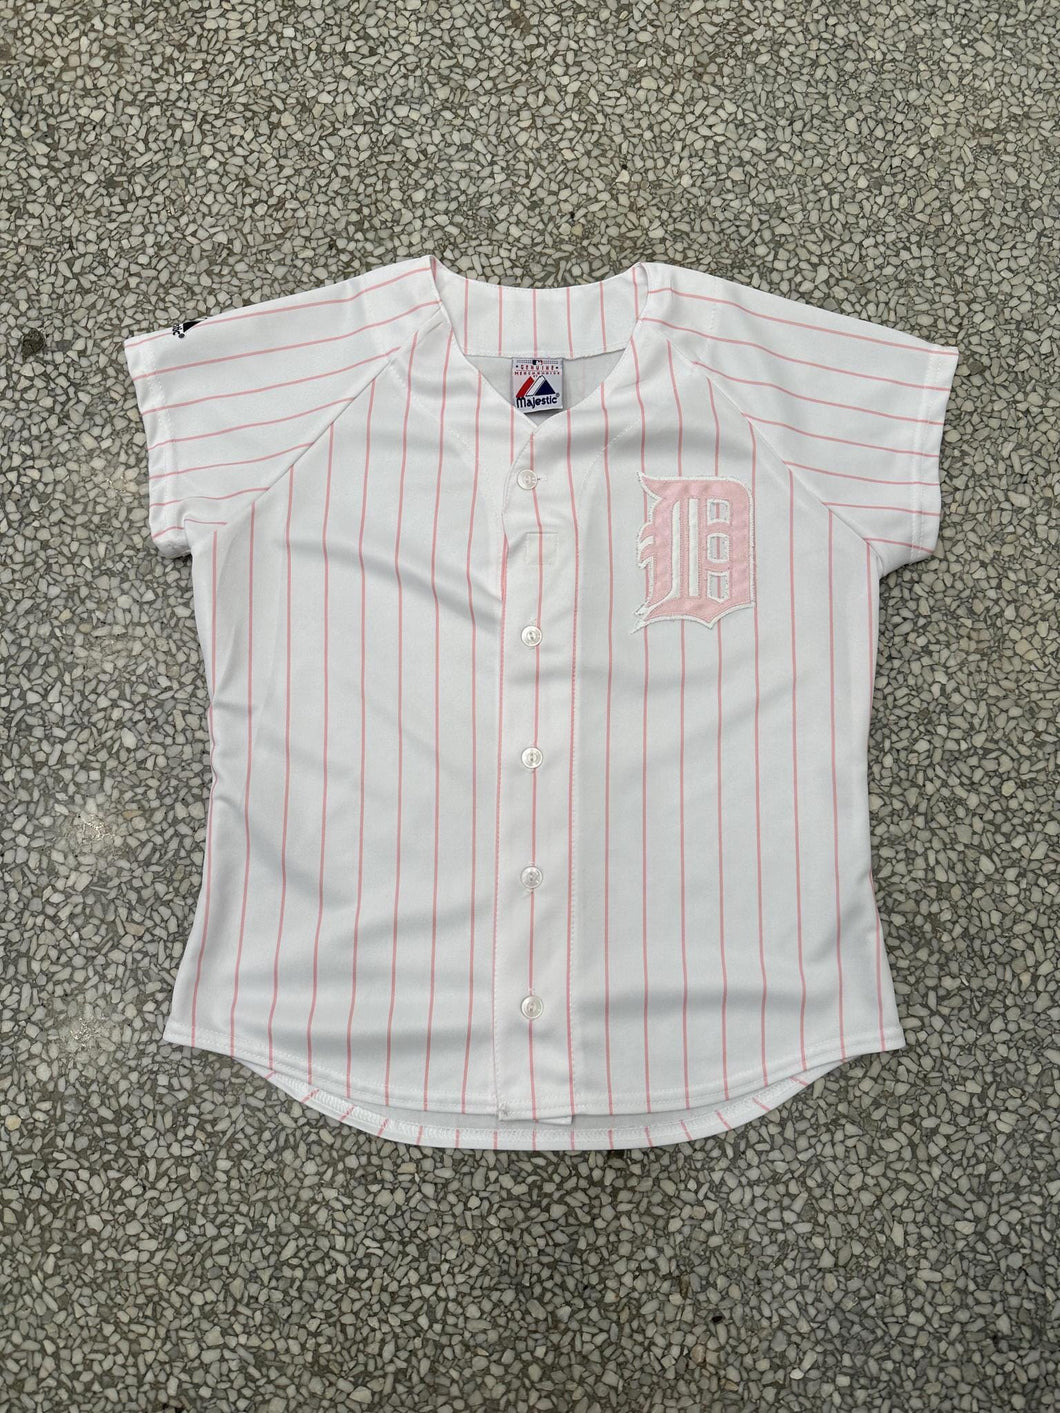 Detroit Tigers Vintage 90s Women's Majestic Baseball Jersey White Pink Pinstripes ABC Vintage 